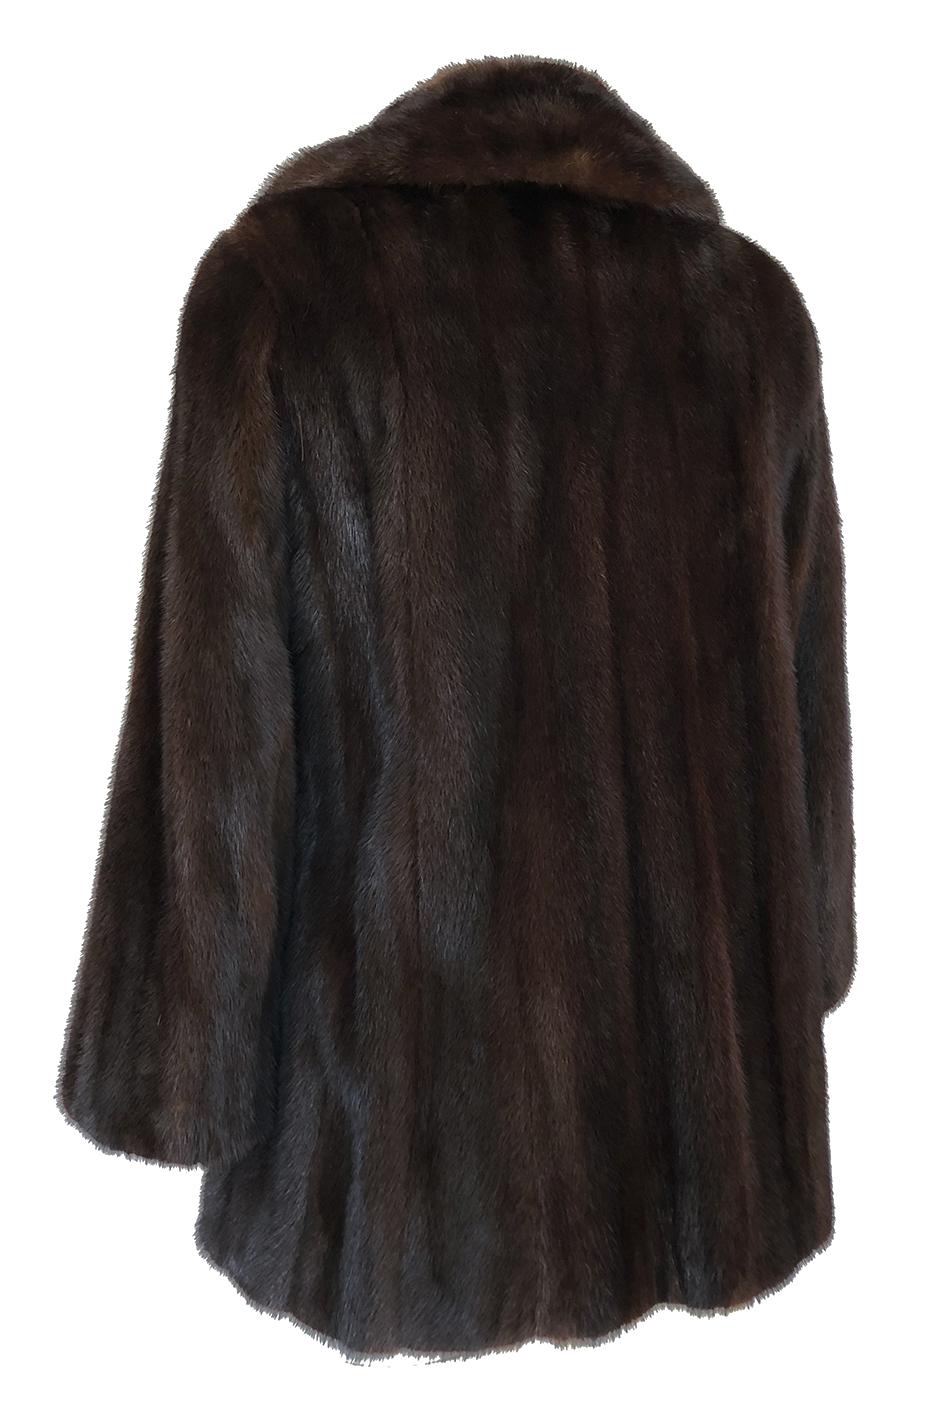 Women's 1960s Unlabeled Pierre Cardin Deep Chocolate Fur Pea Jacket or Coat